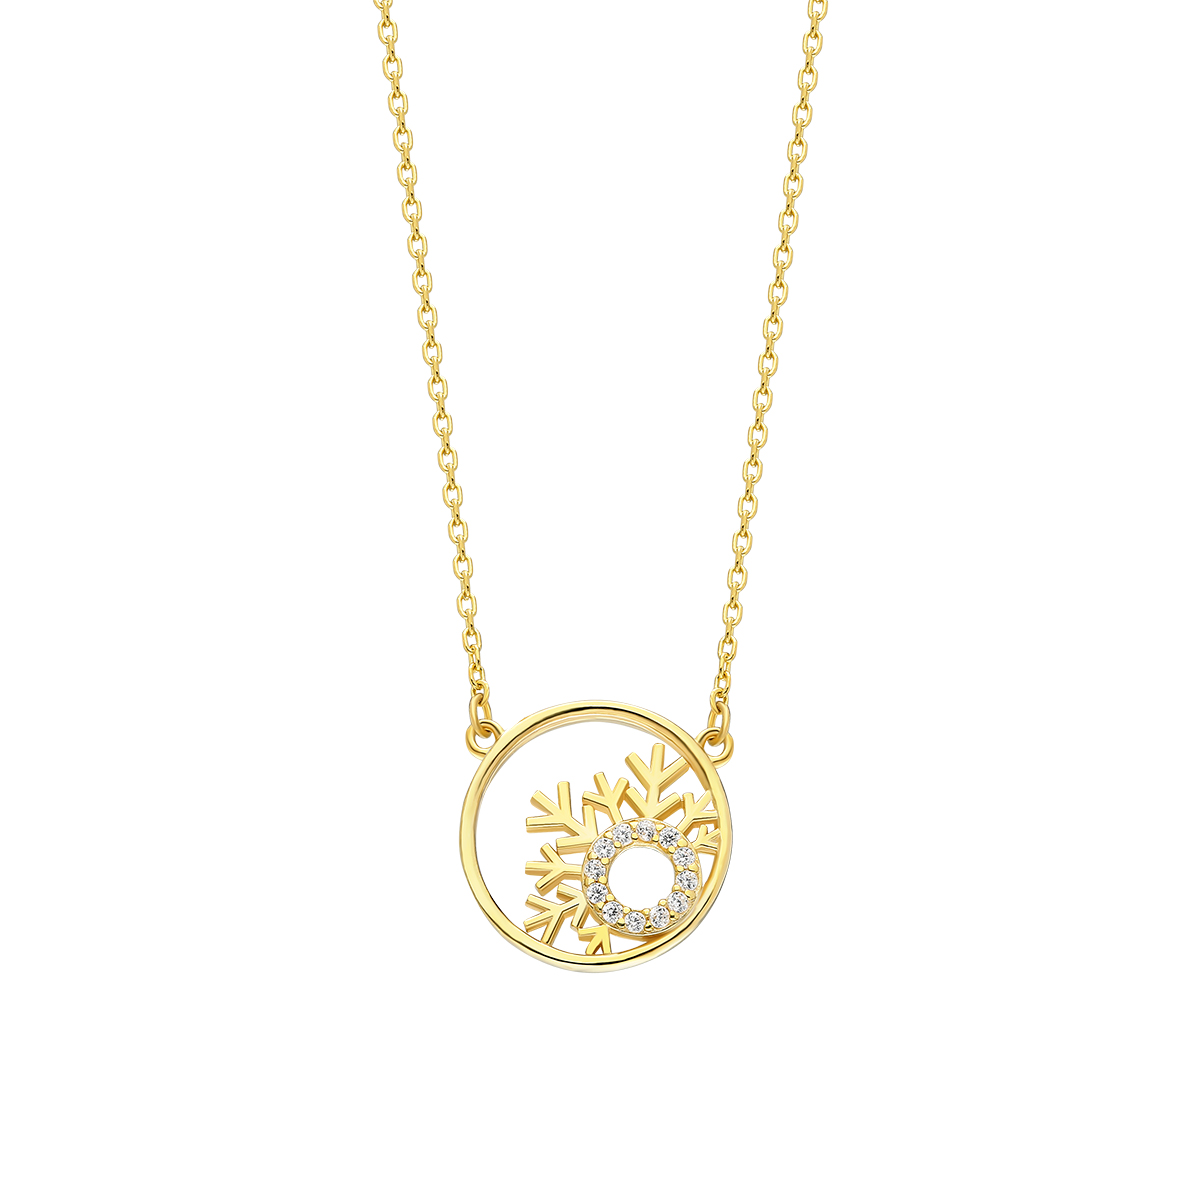 Silver Necklace Snowflake Symbol Special Design 925 Sterling 